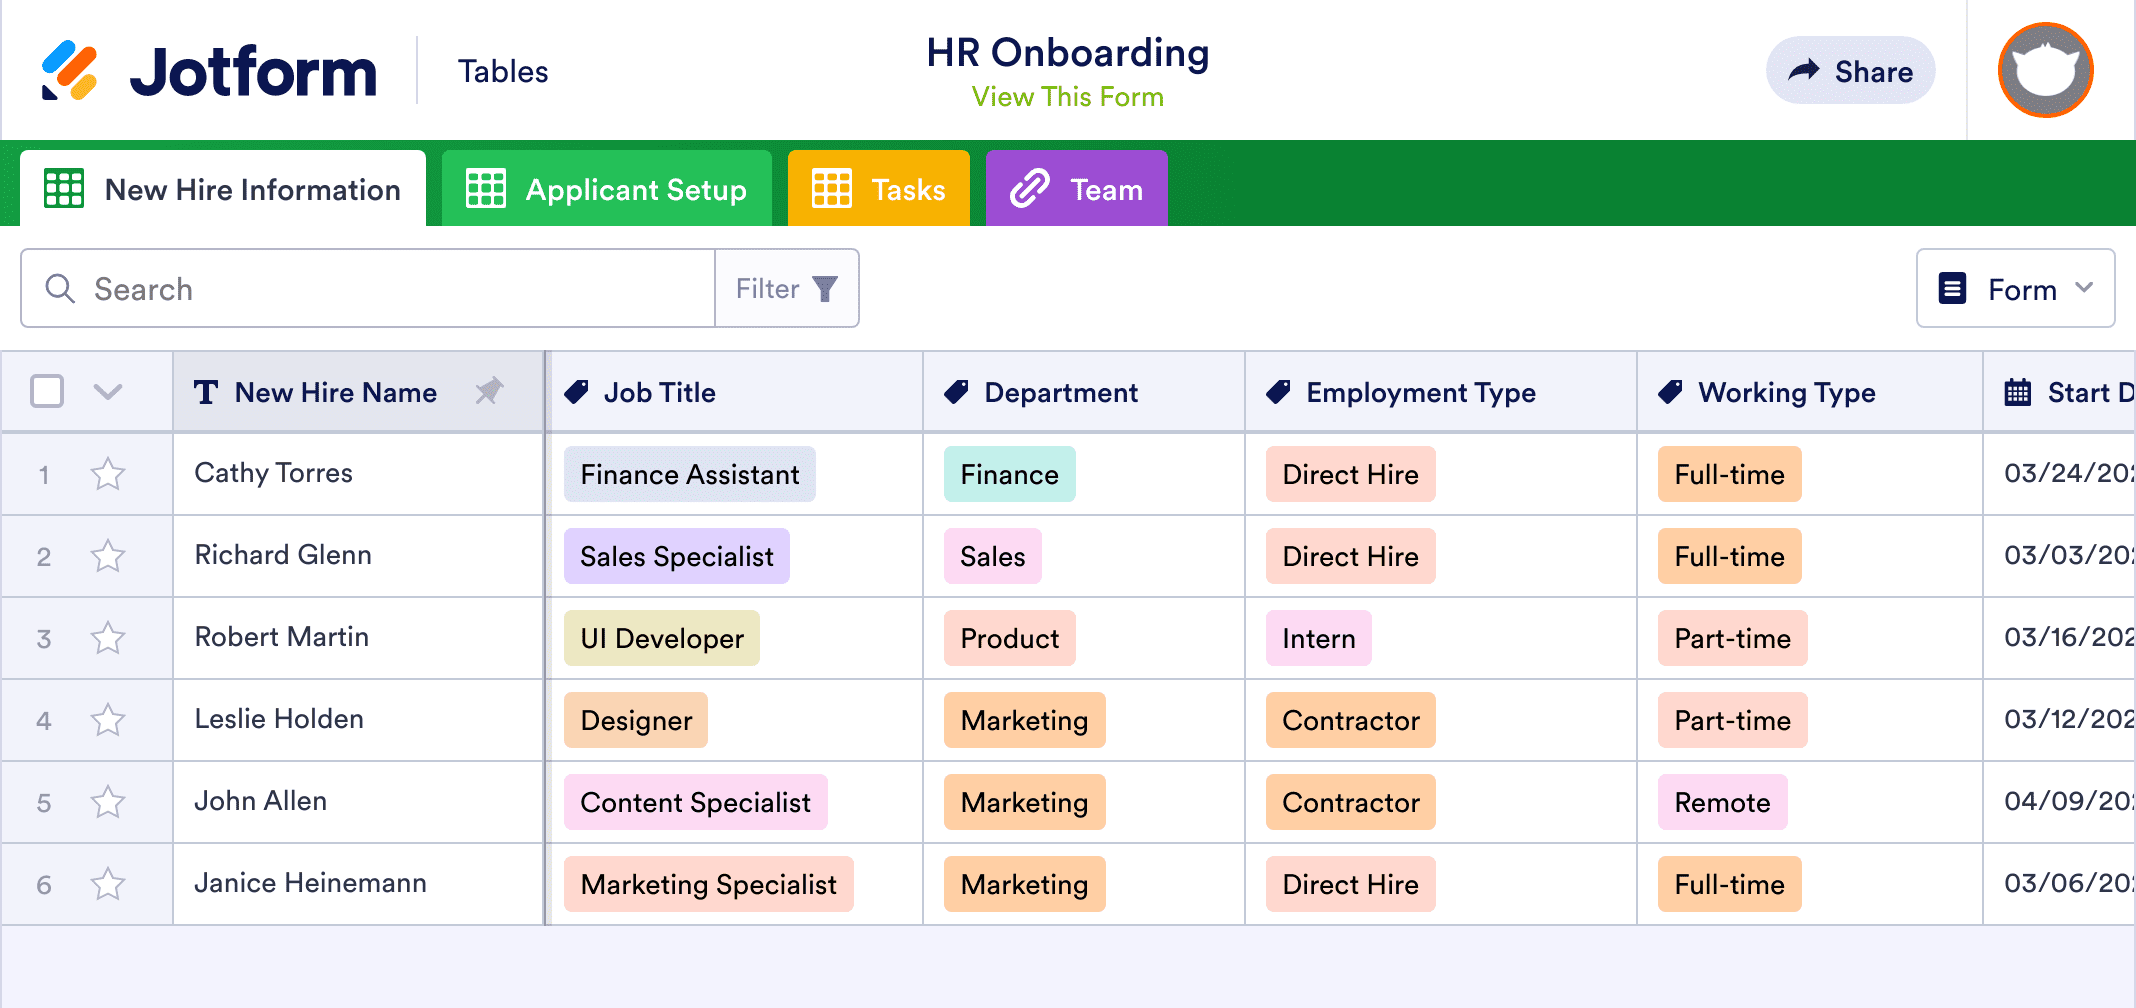 HR Onboarding Template | Jotform Tables